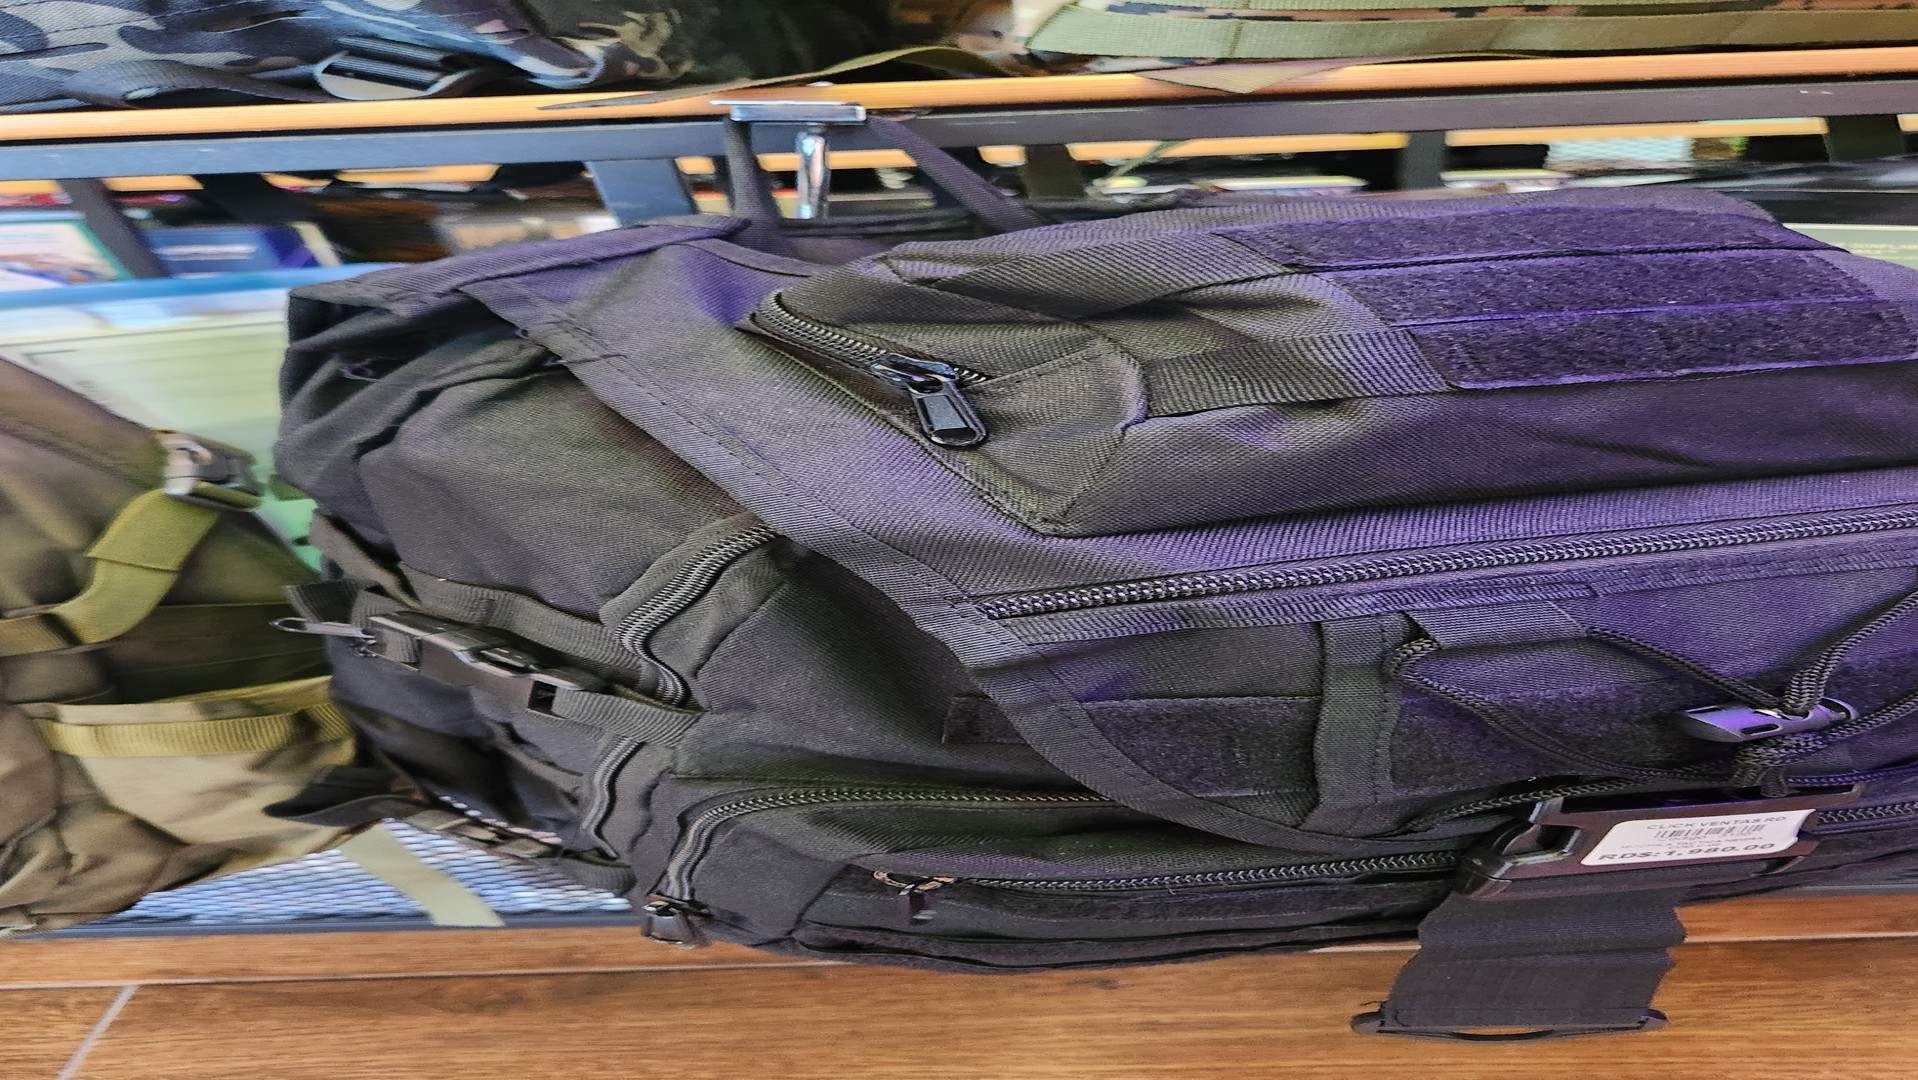 carteras y maletas - Mochila tactica negra 60 libras mediana, bulto, bolso, maleta, bolsa. 2